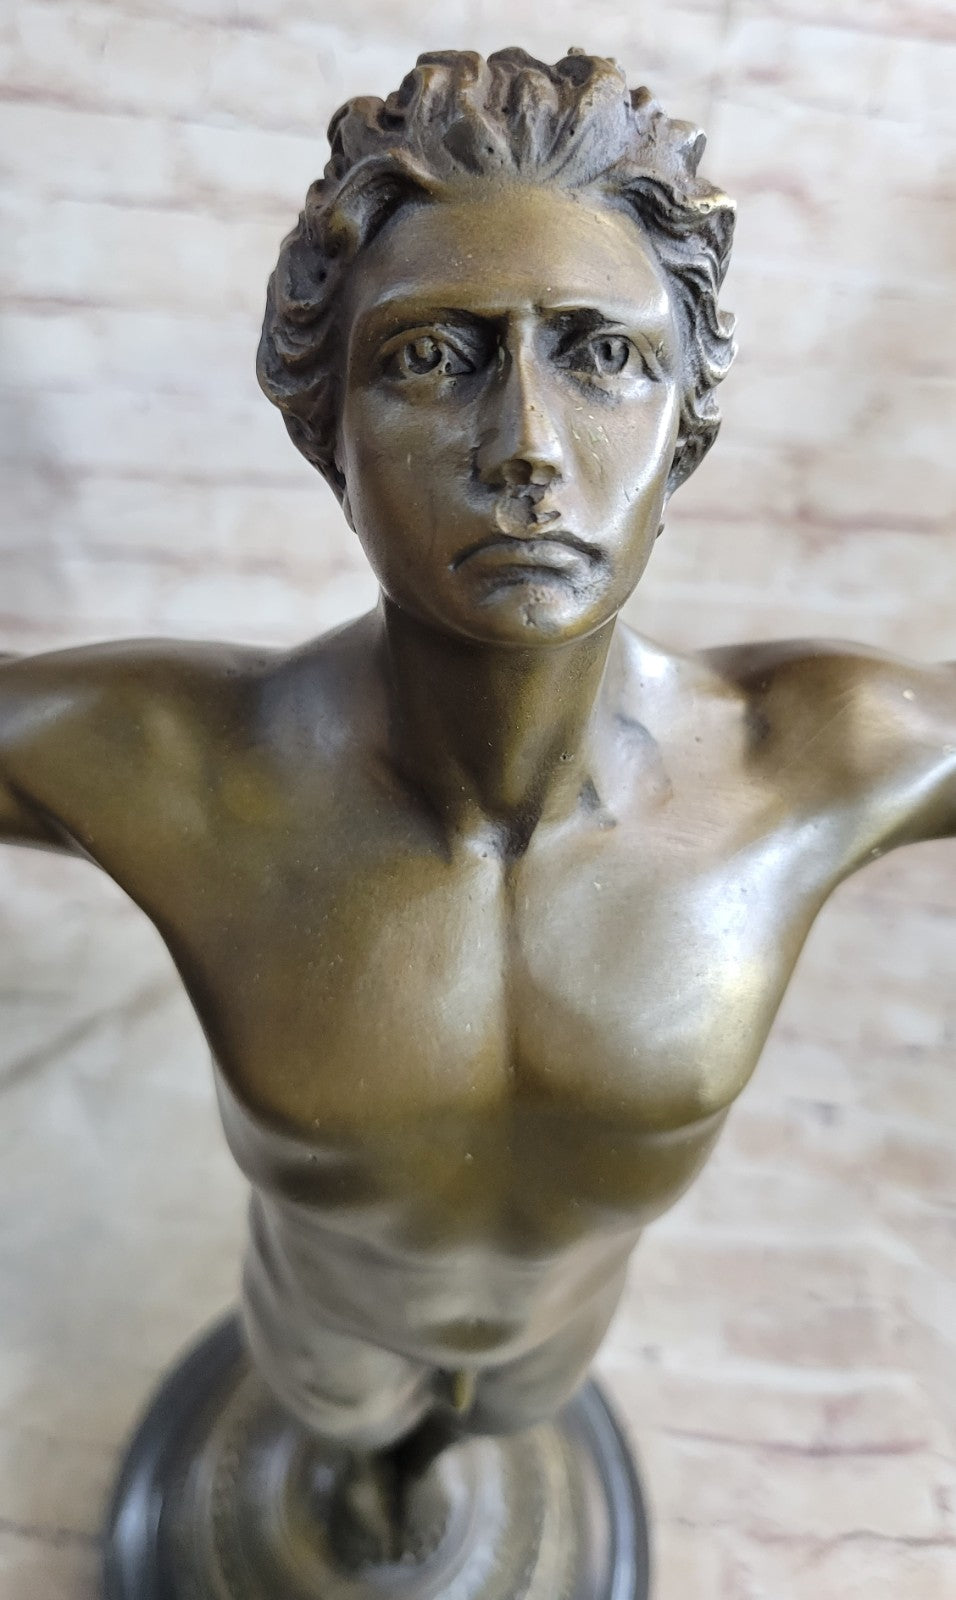 SIGNED, bronze Sculpture winged man nude Icarus "Rising Sun" Classic Artwork